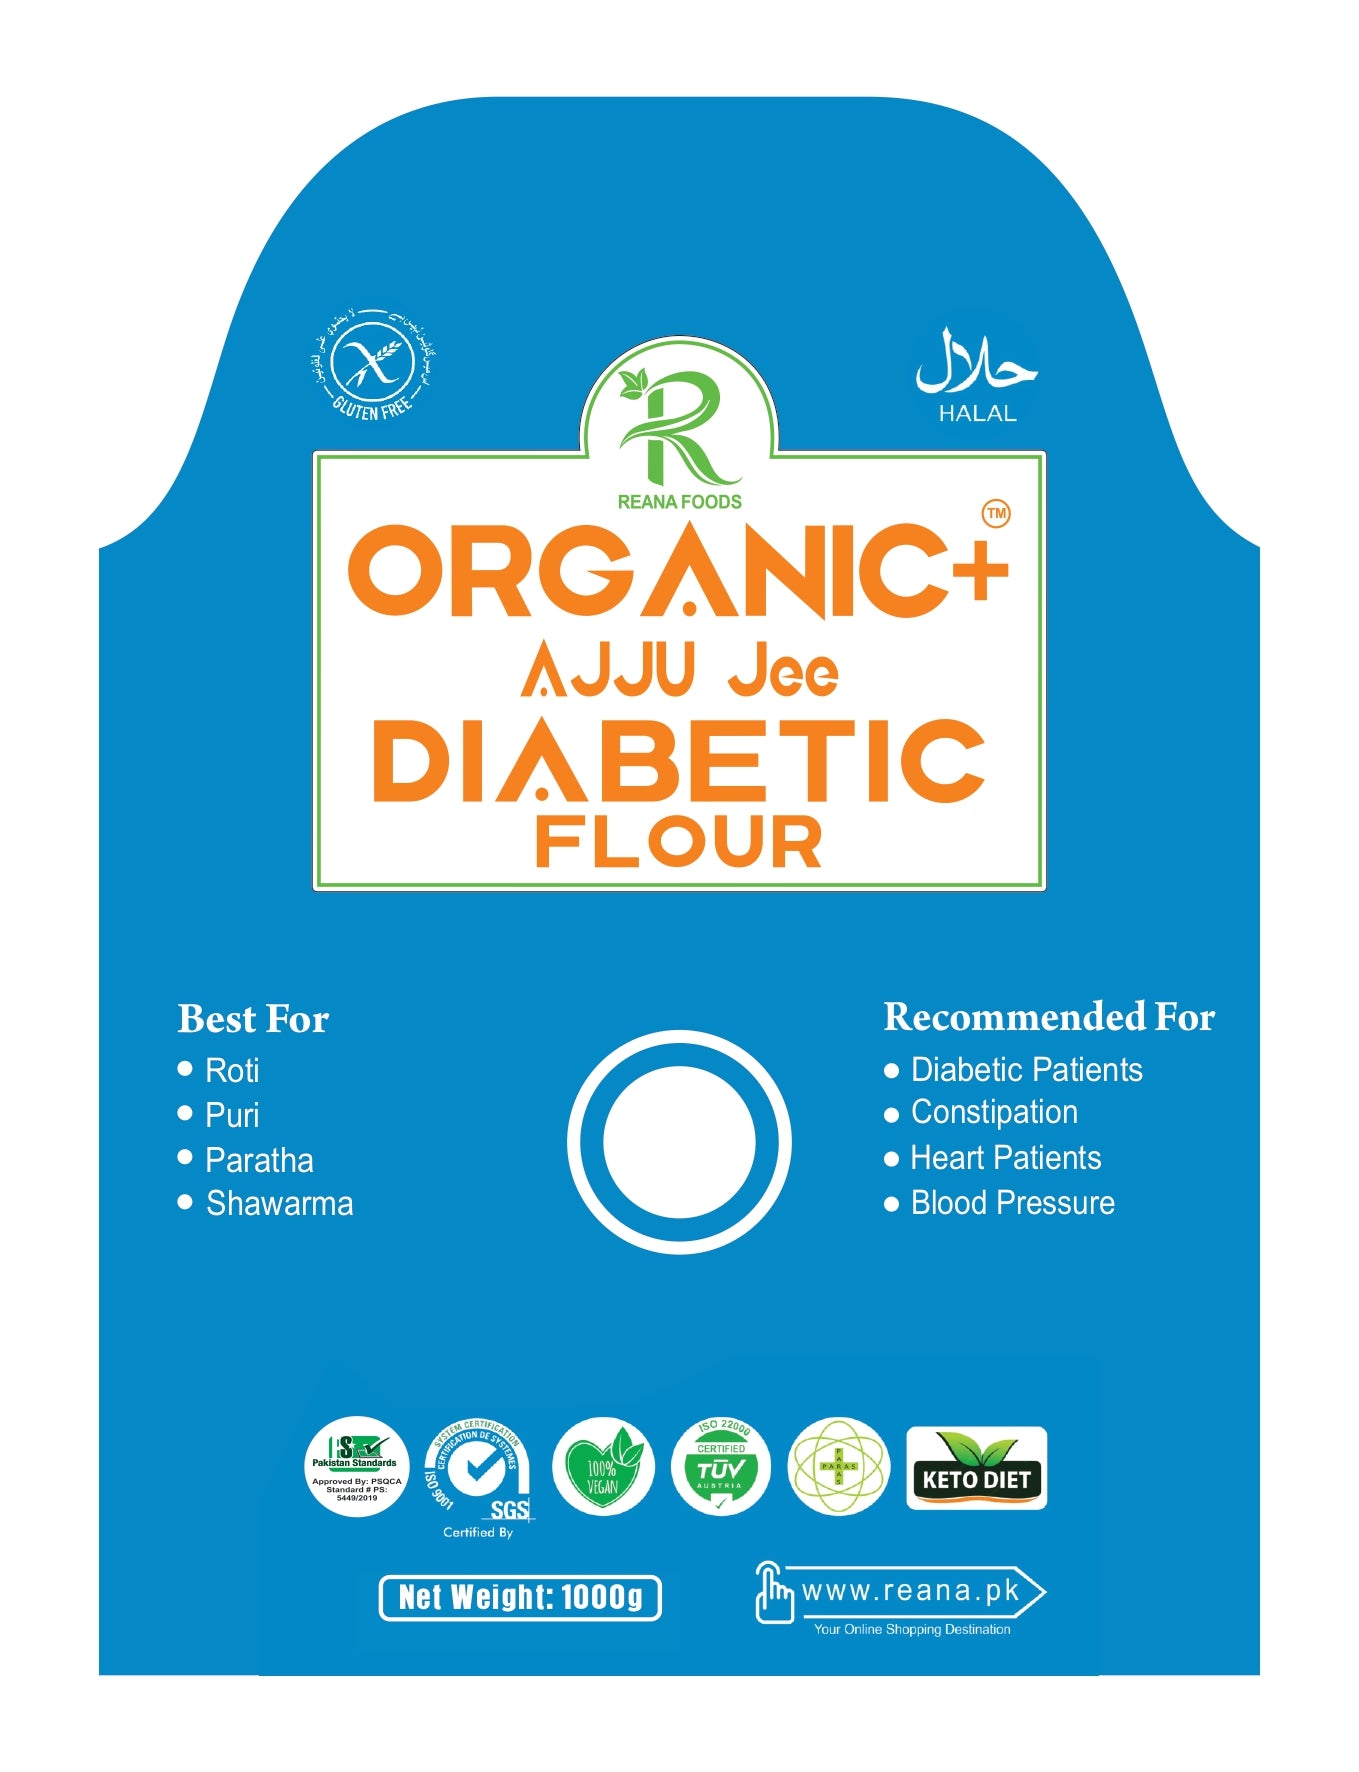 Organic+ Diabetic Flour - 1000g